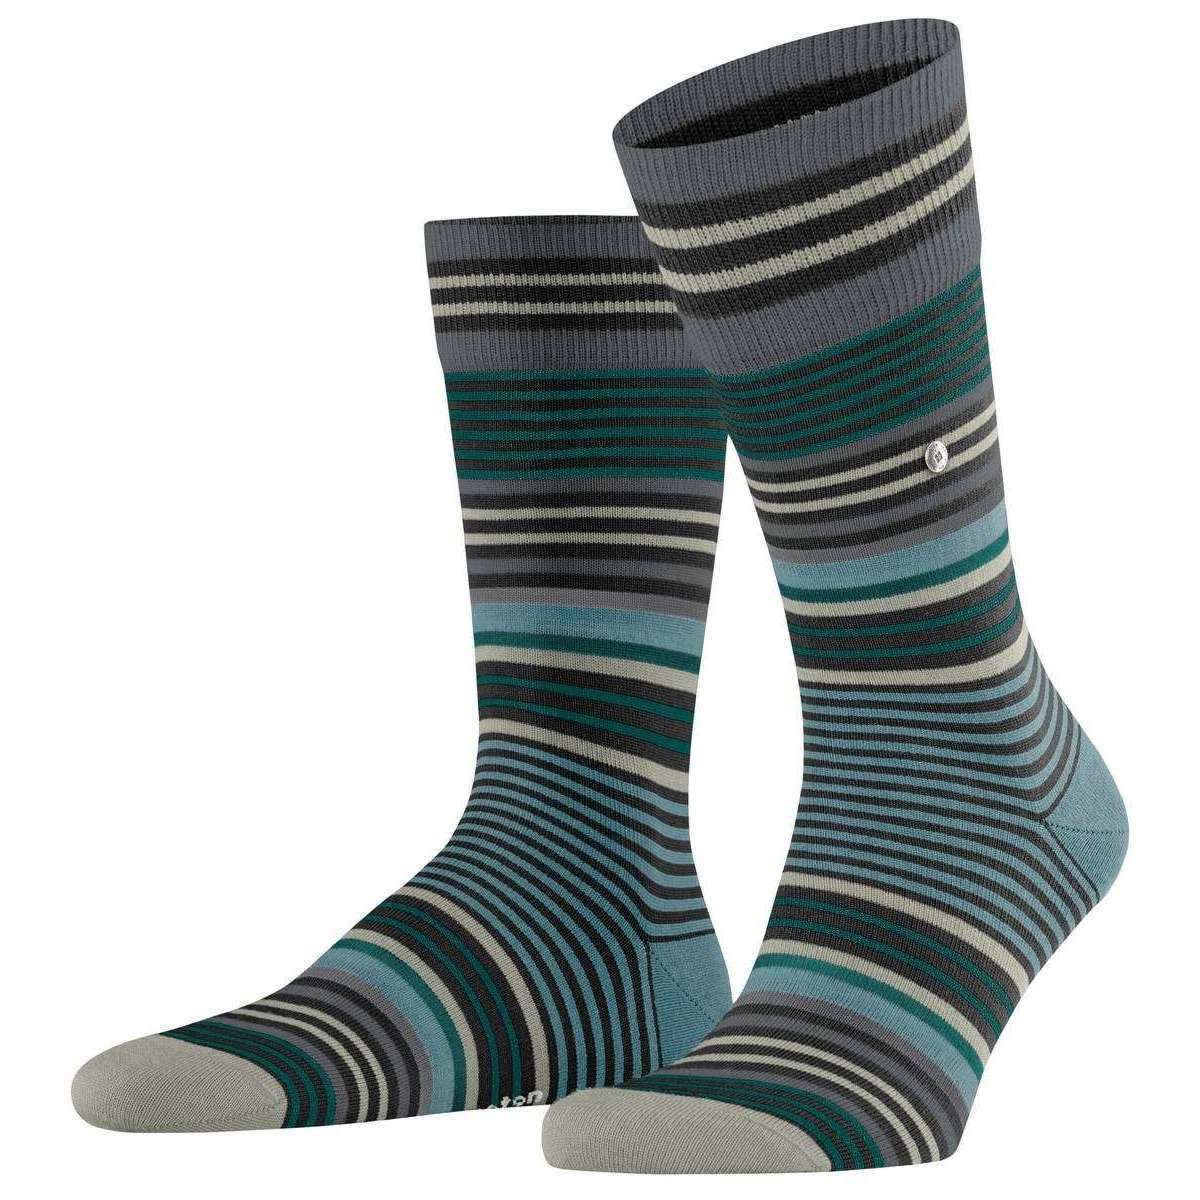 Burlington Stripe Socks - Black